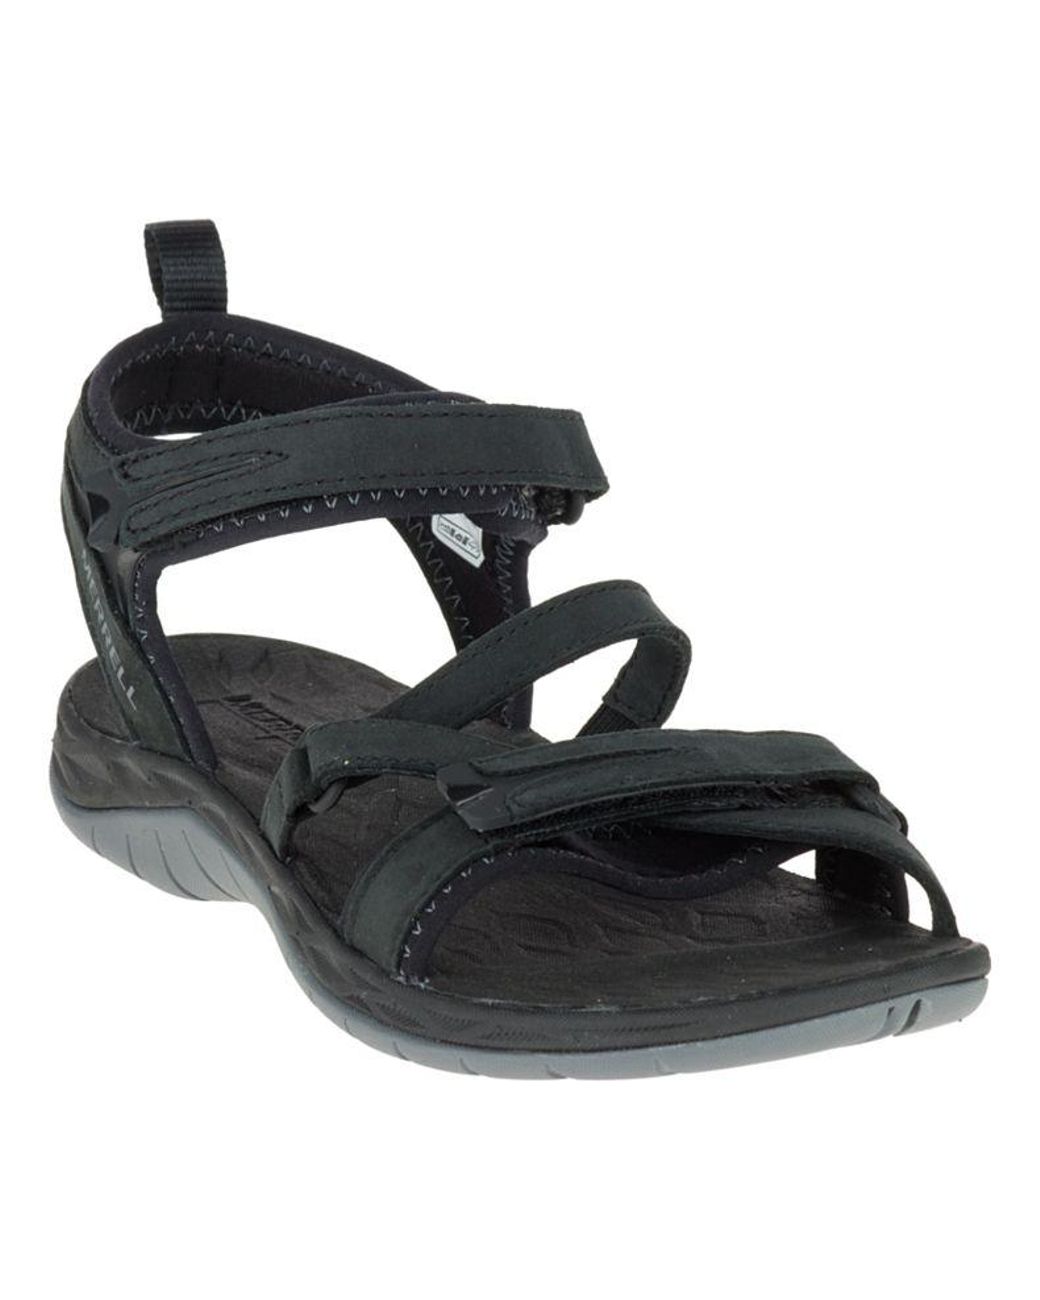 Merrell Synthetic Siren Strap Q2 Waterproof Leather Walking Sandals in  Black | Lyst